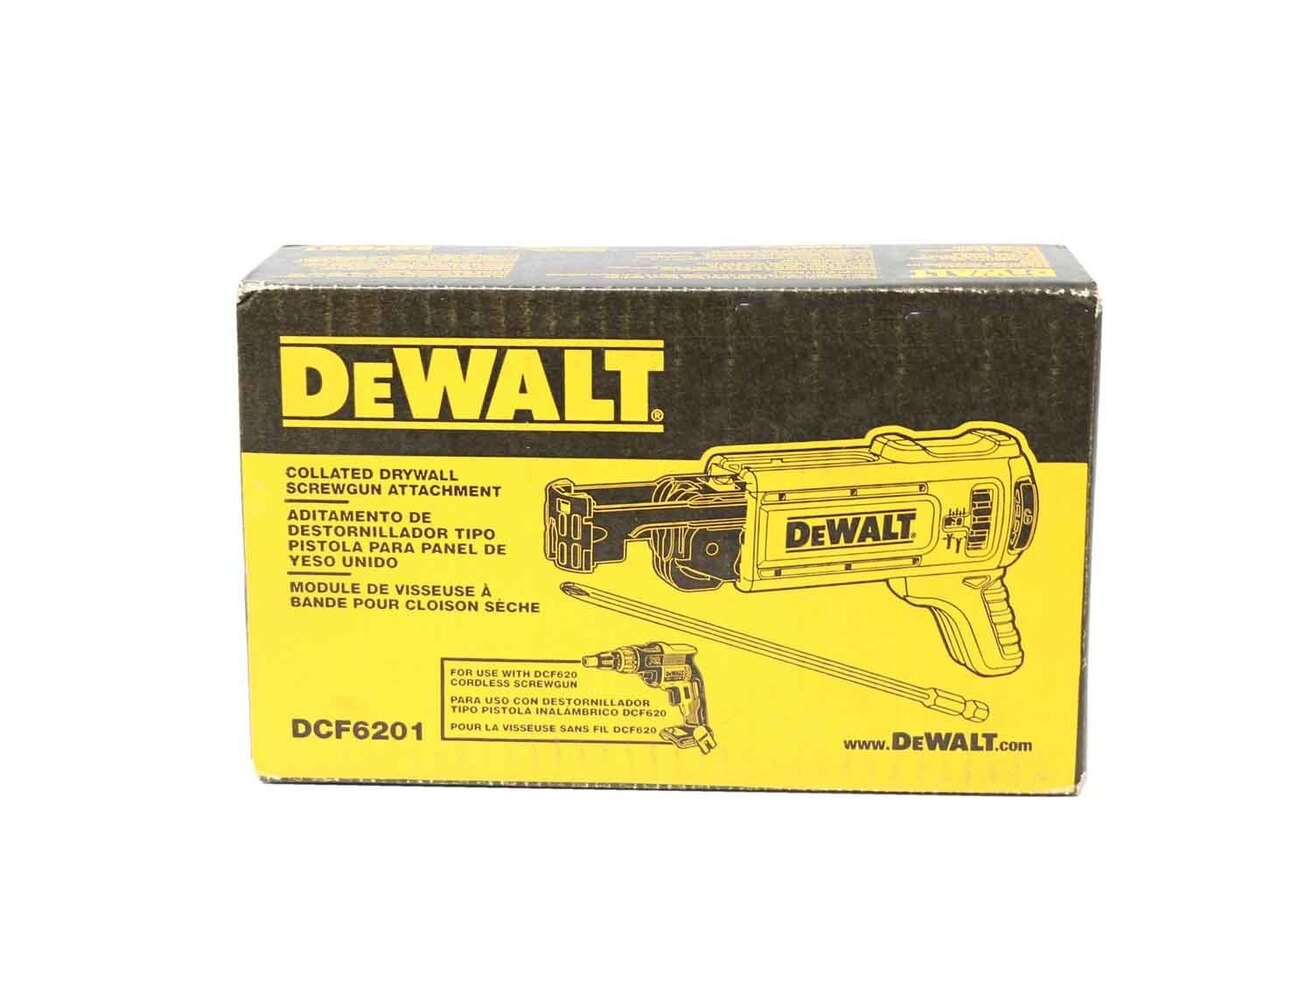 DEWALT 20 V0LT MAX XR LI ION DRYWALL SCREW GUN CORDLESS COLLATED MAGAZINE